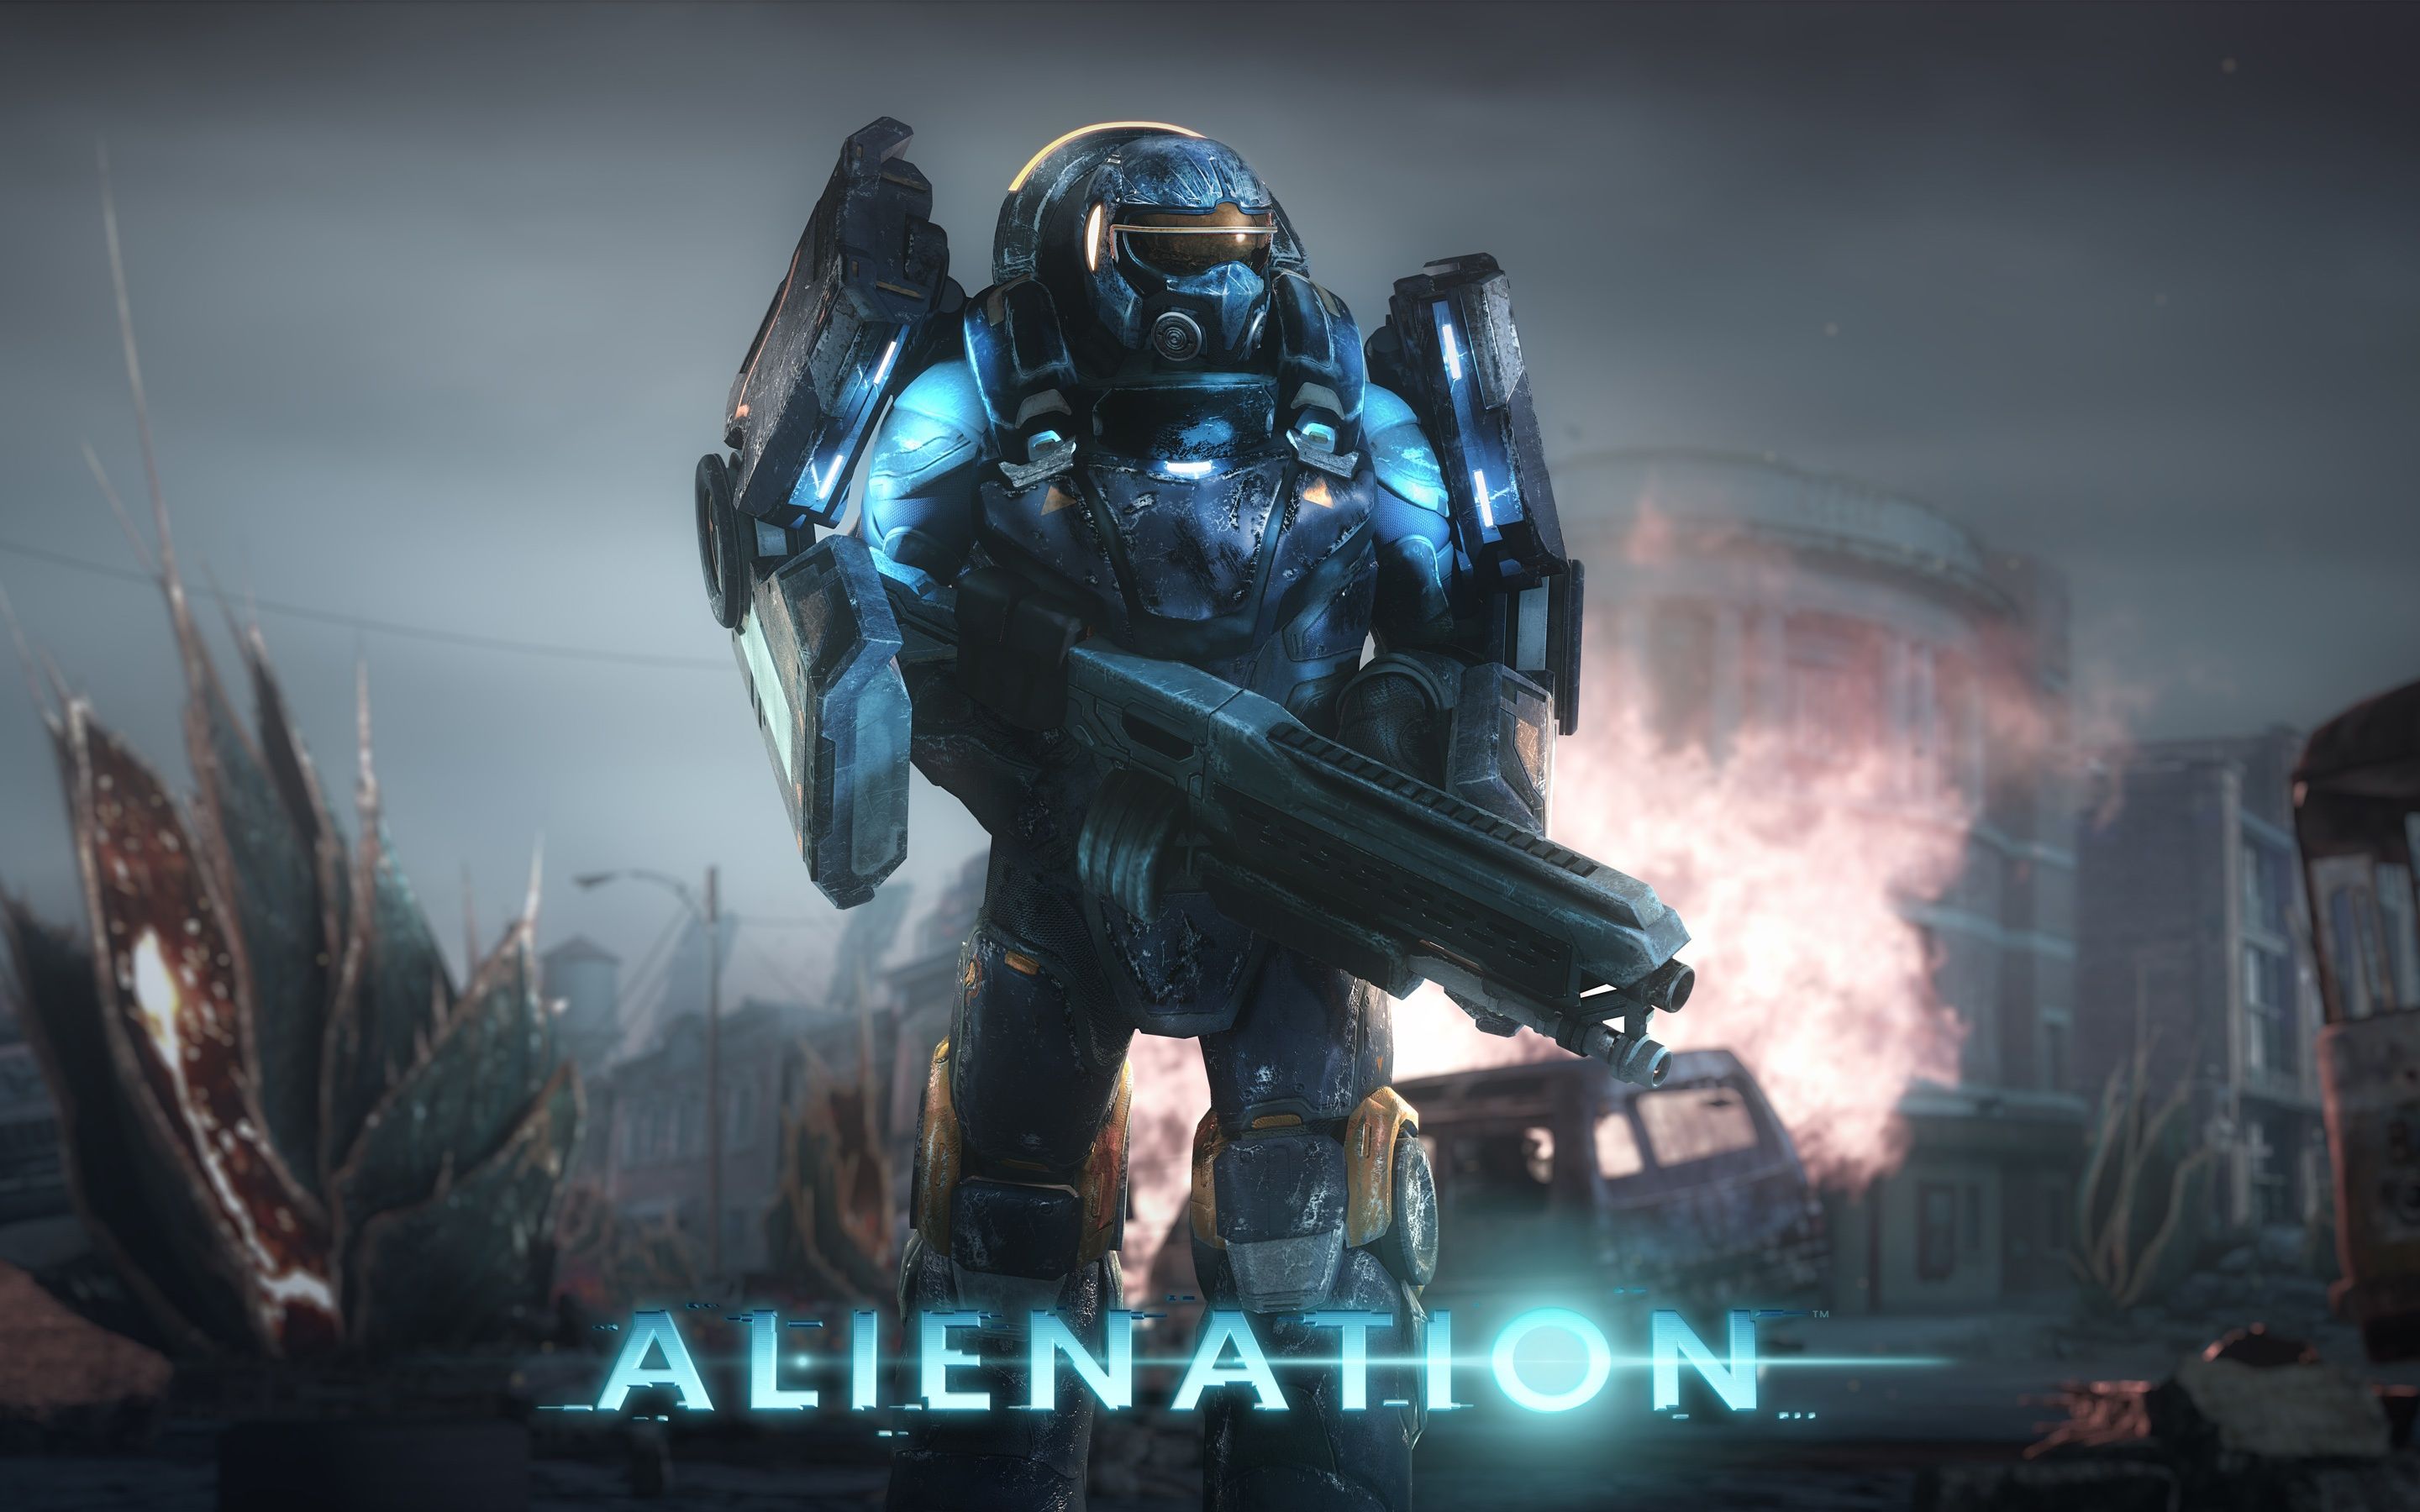 Alienation PS4 Game 4K 8K Wallpaper in jpg format for free download